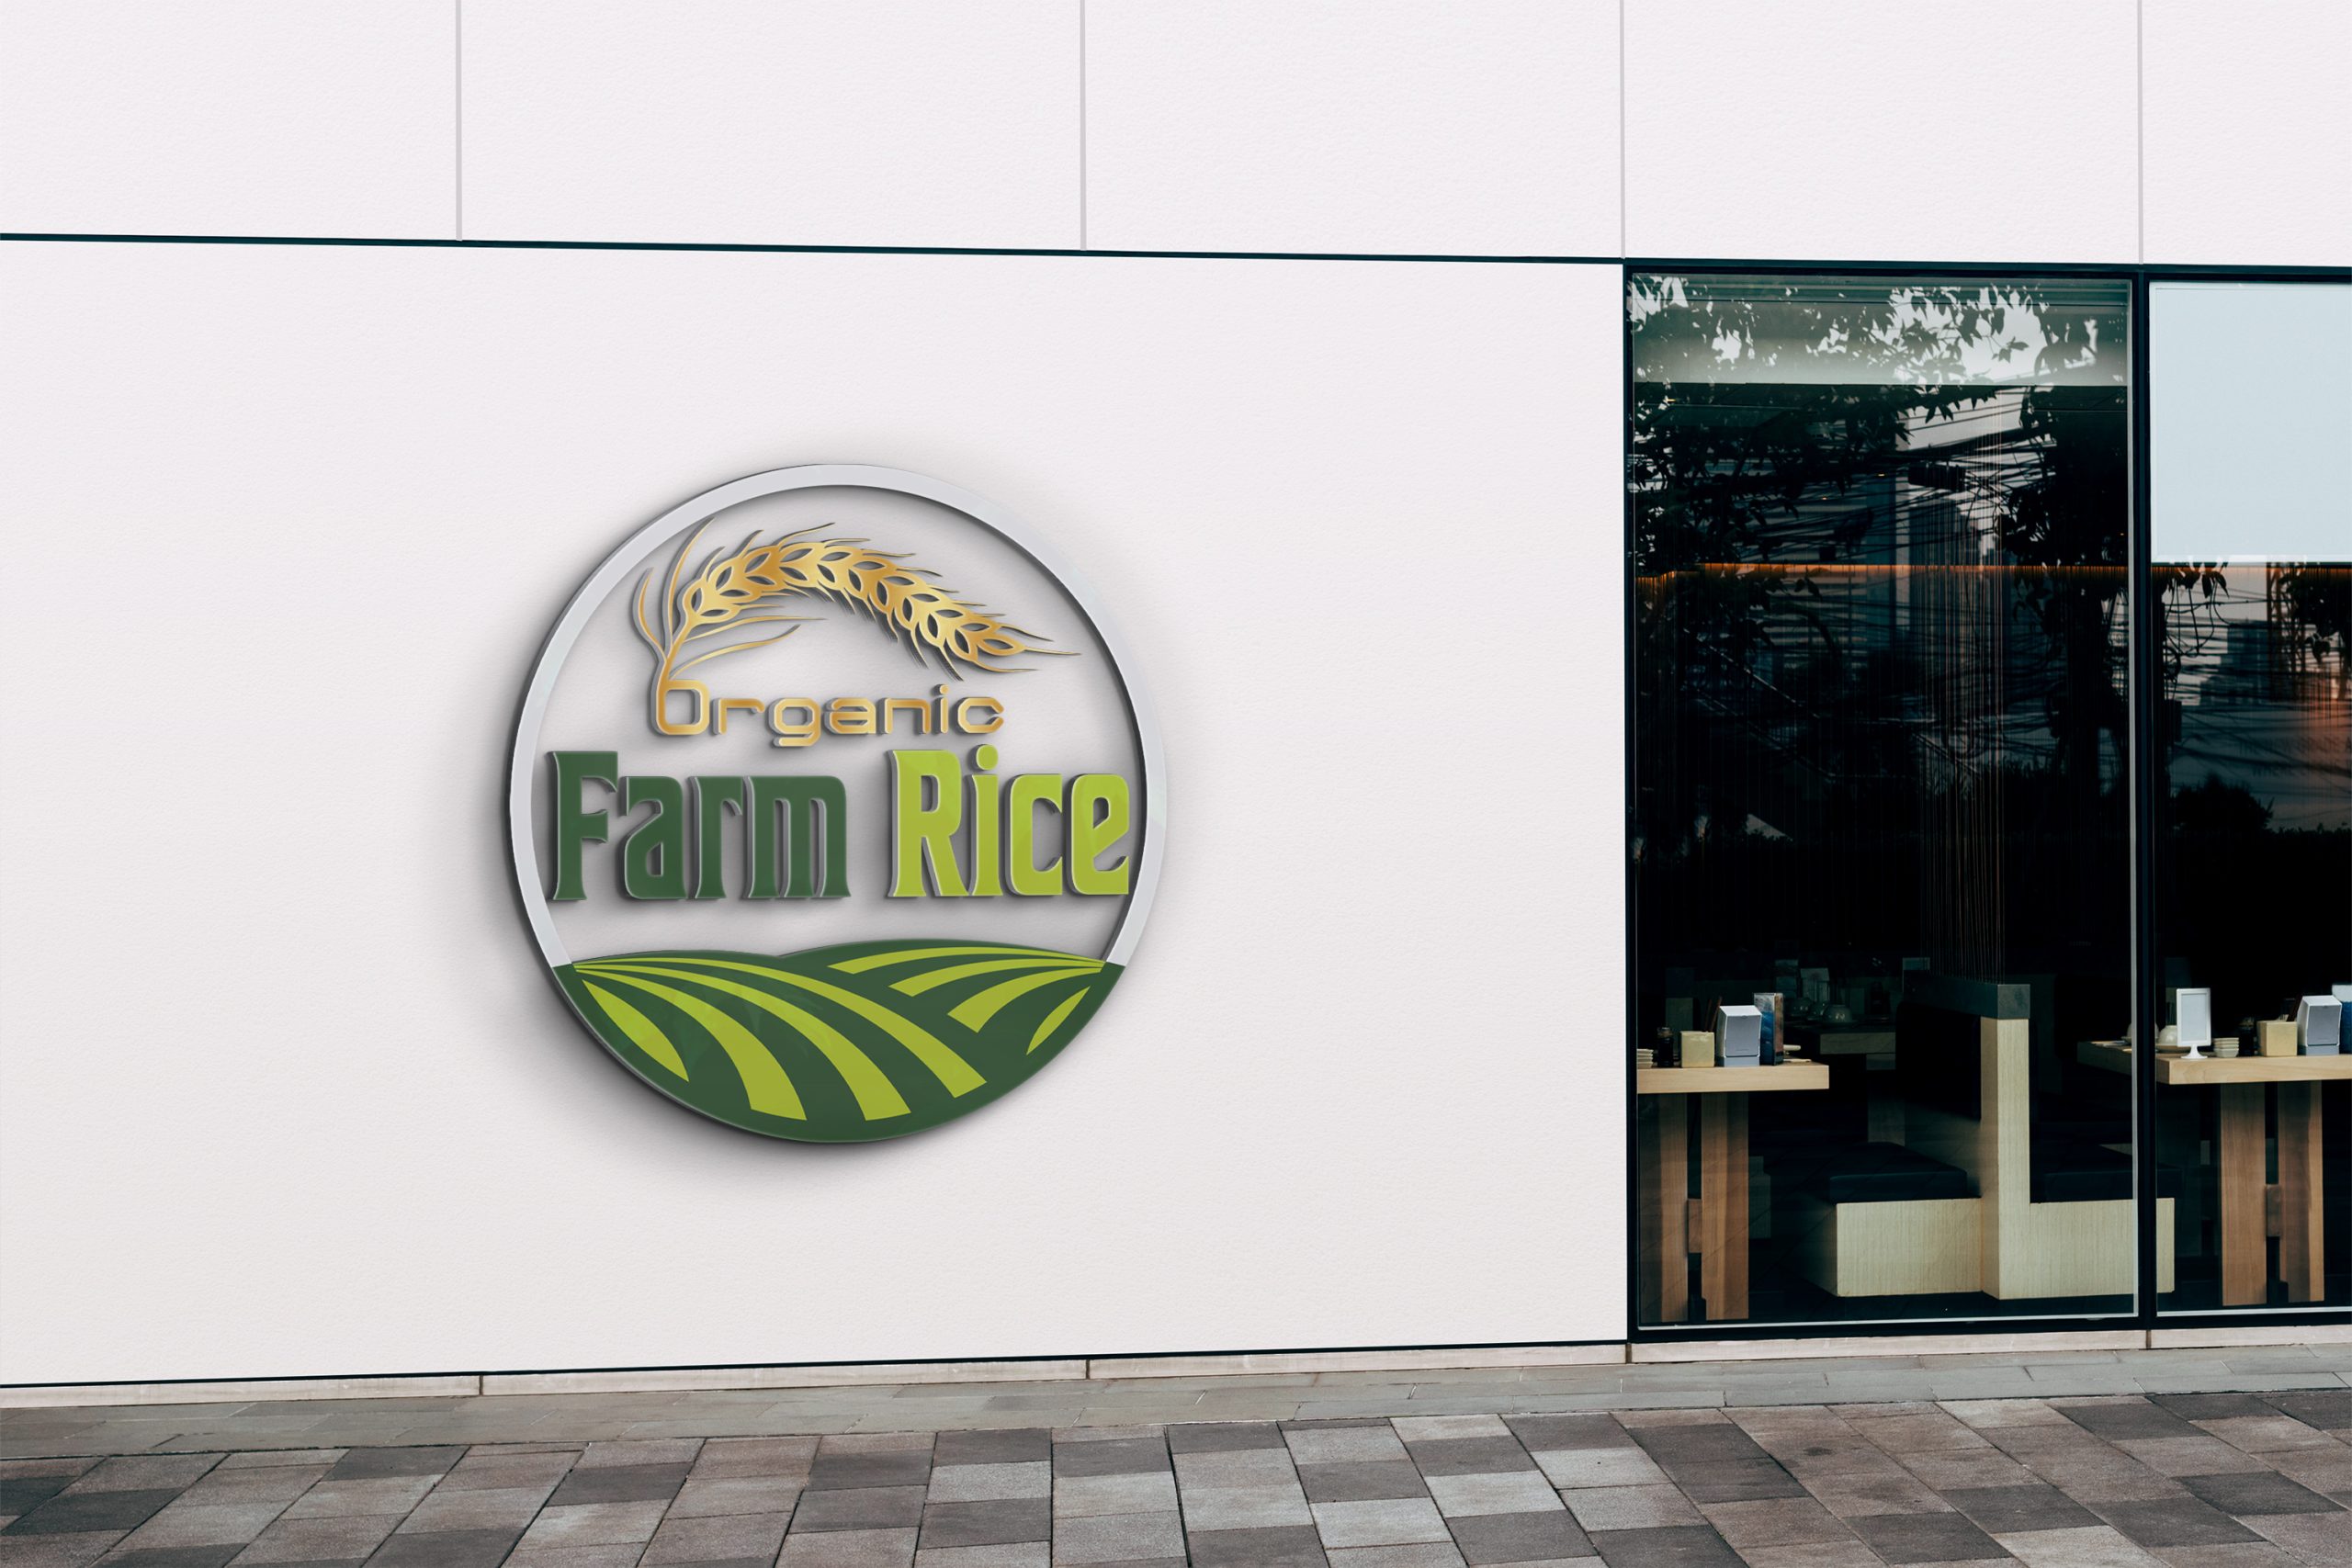 Farm, Agriculture Logo Design